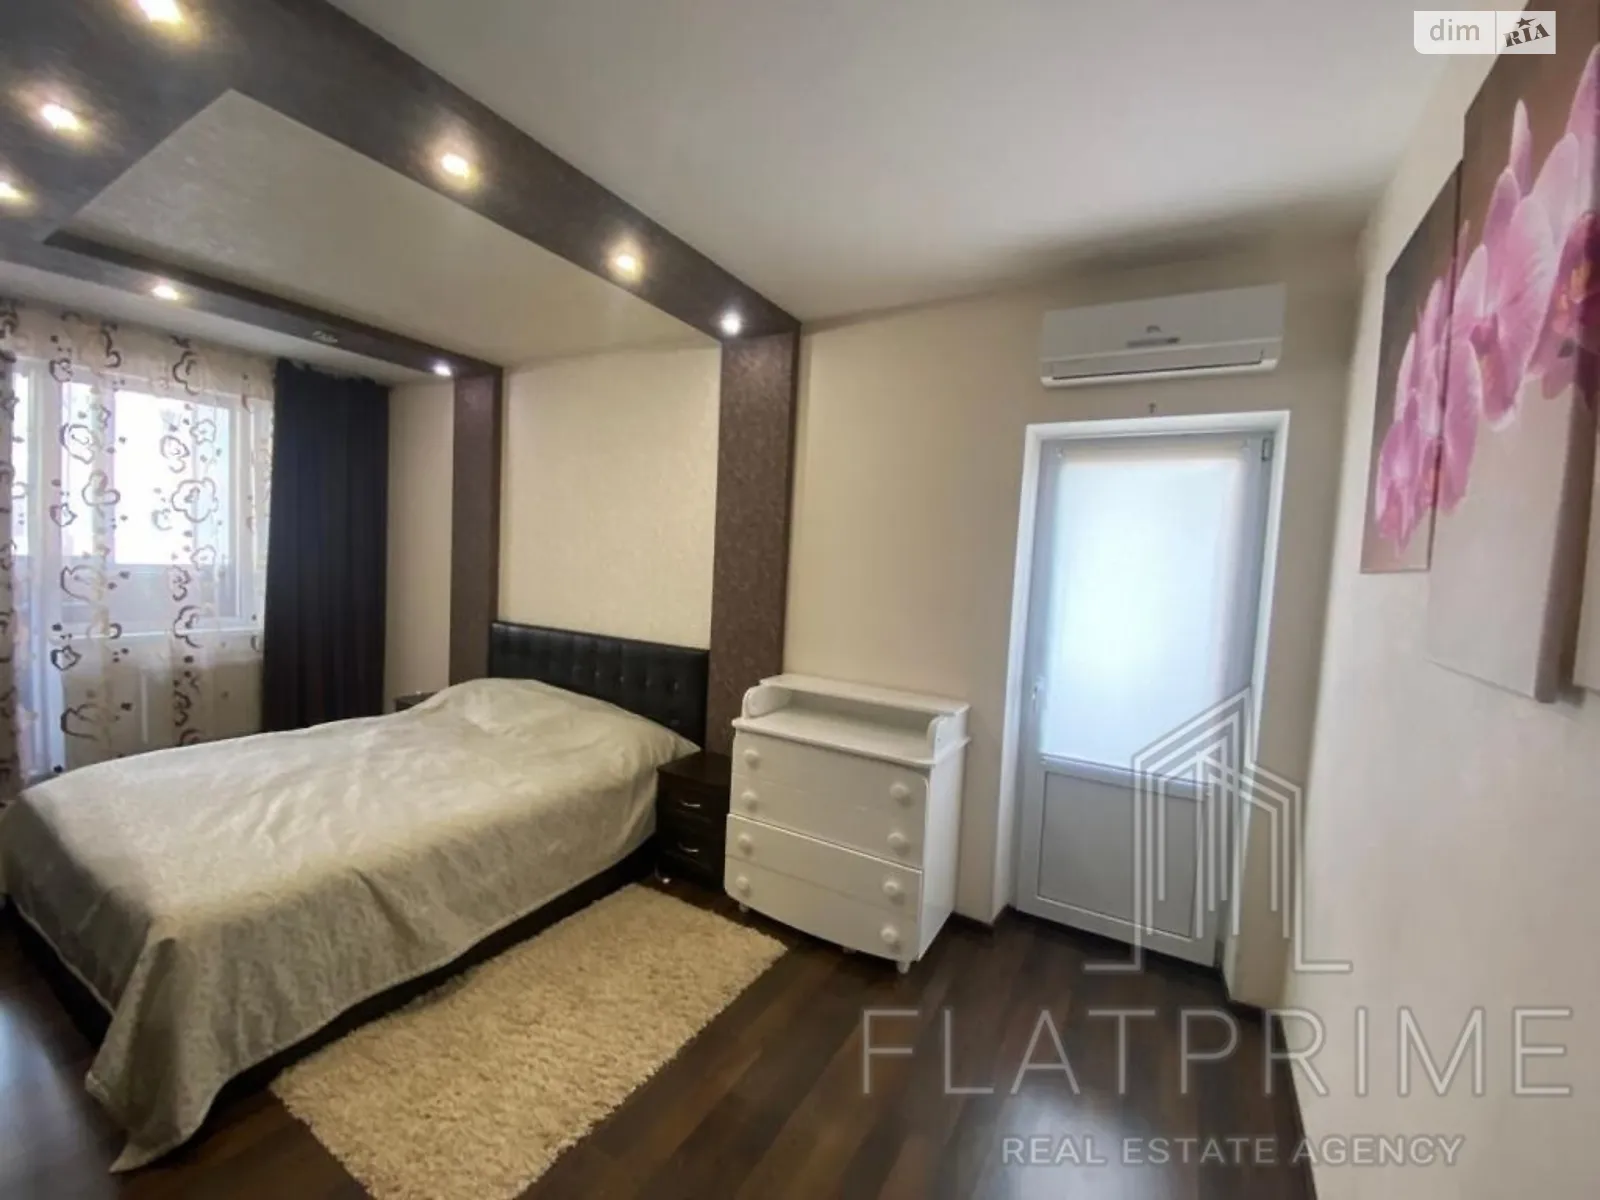 Продается комната 66 кв. м в Киеве, цена: 95000 $ - фото 1